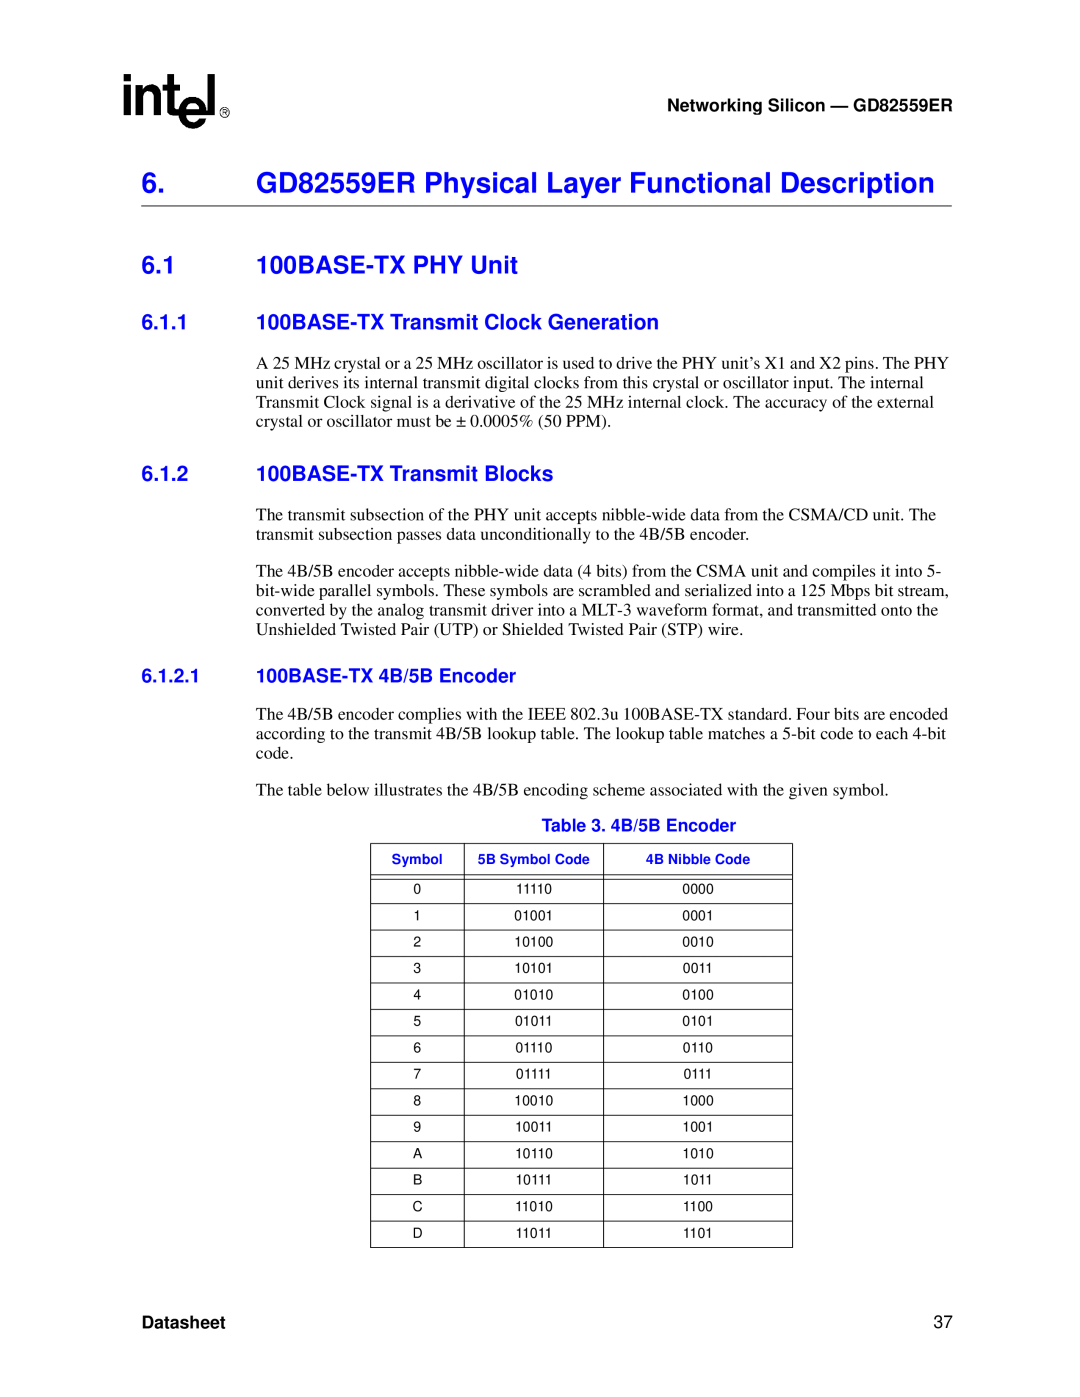 Intel 6. GD82559ER Physical Layer Functional Description, 6.1 100BASE-TX PHY Unit, 6.1.2 100BASE-TX Transmit Blocks 